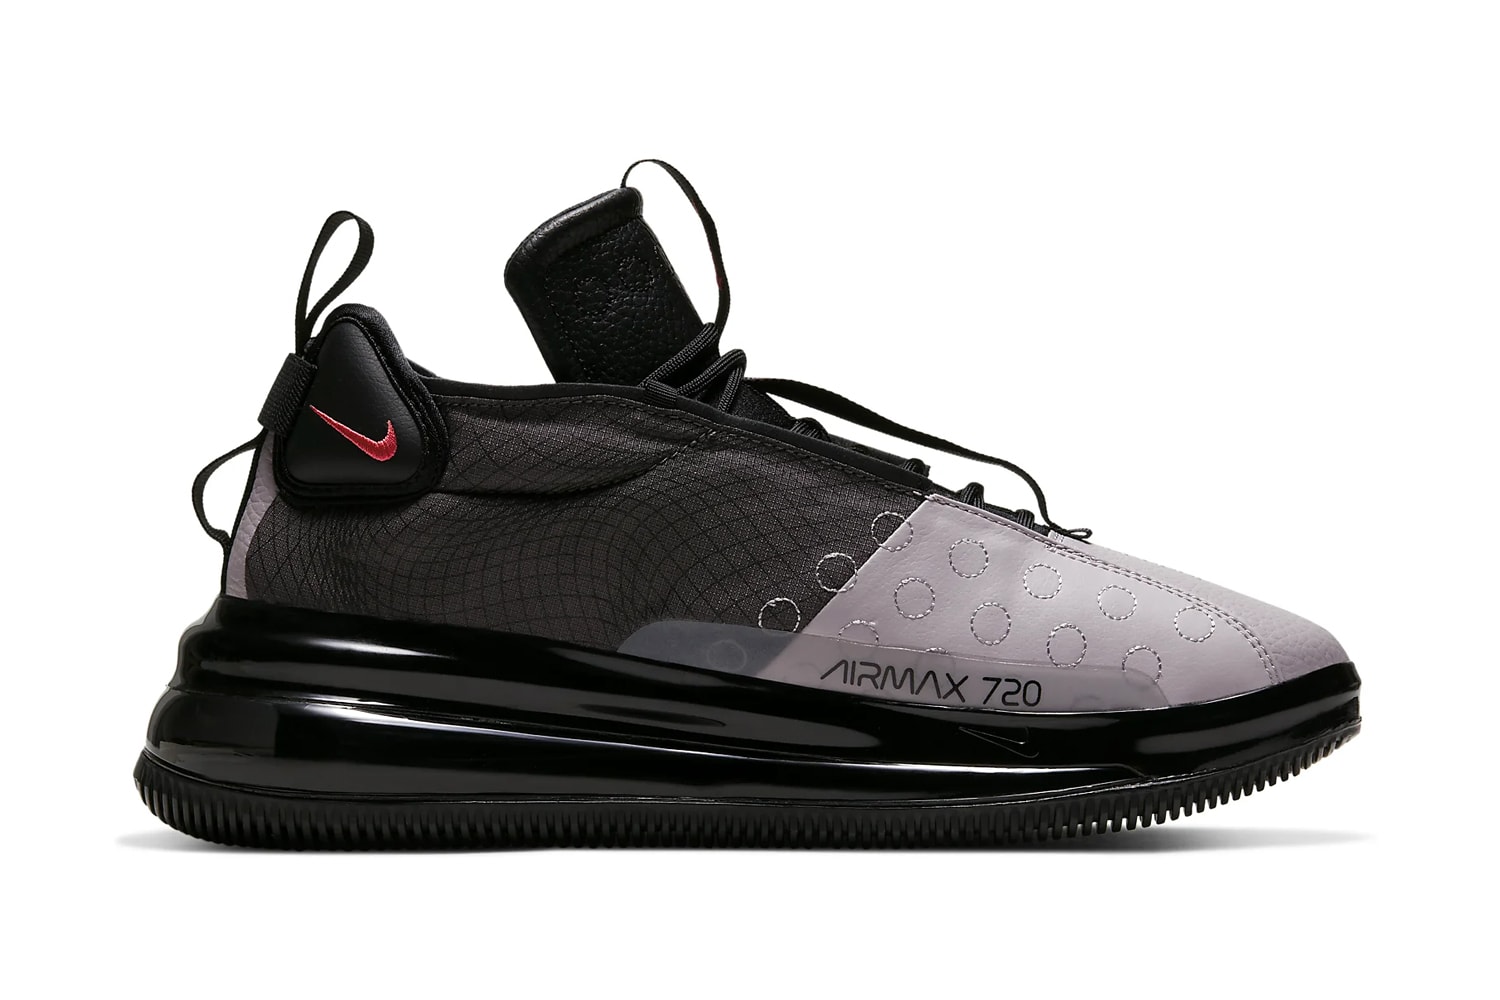 Nike D/MS/X Air Max 720 Waves Silver Lilac/Thunder Grey BQ4430-001 sneakers kicks footwear shoes style air max 